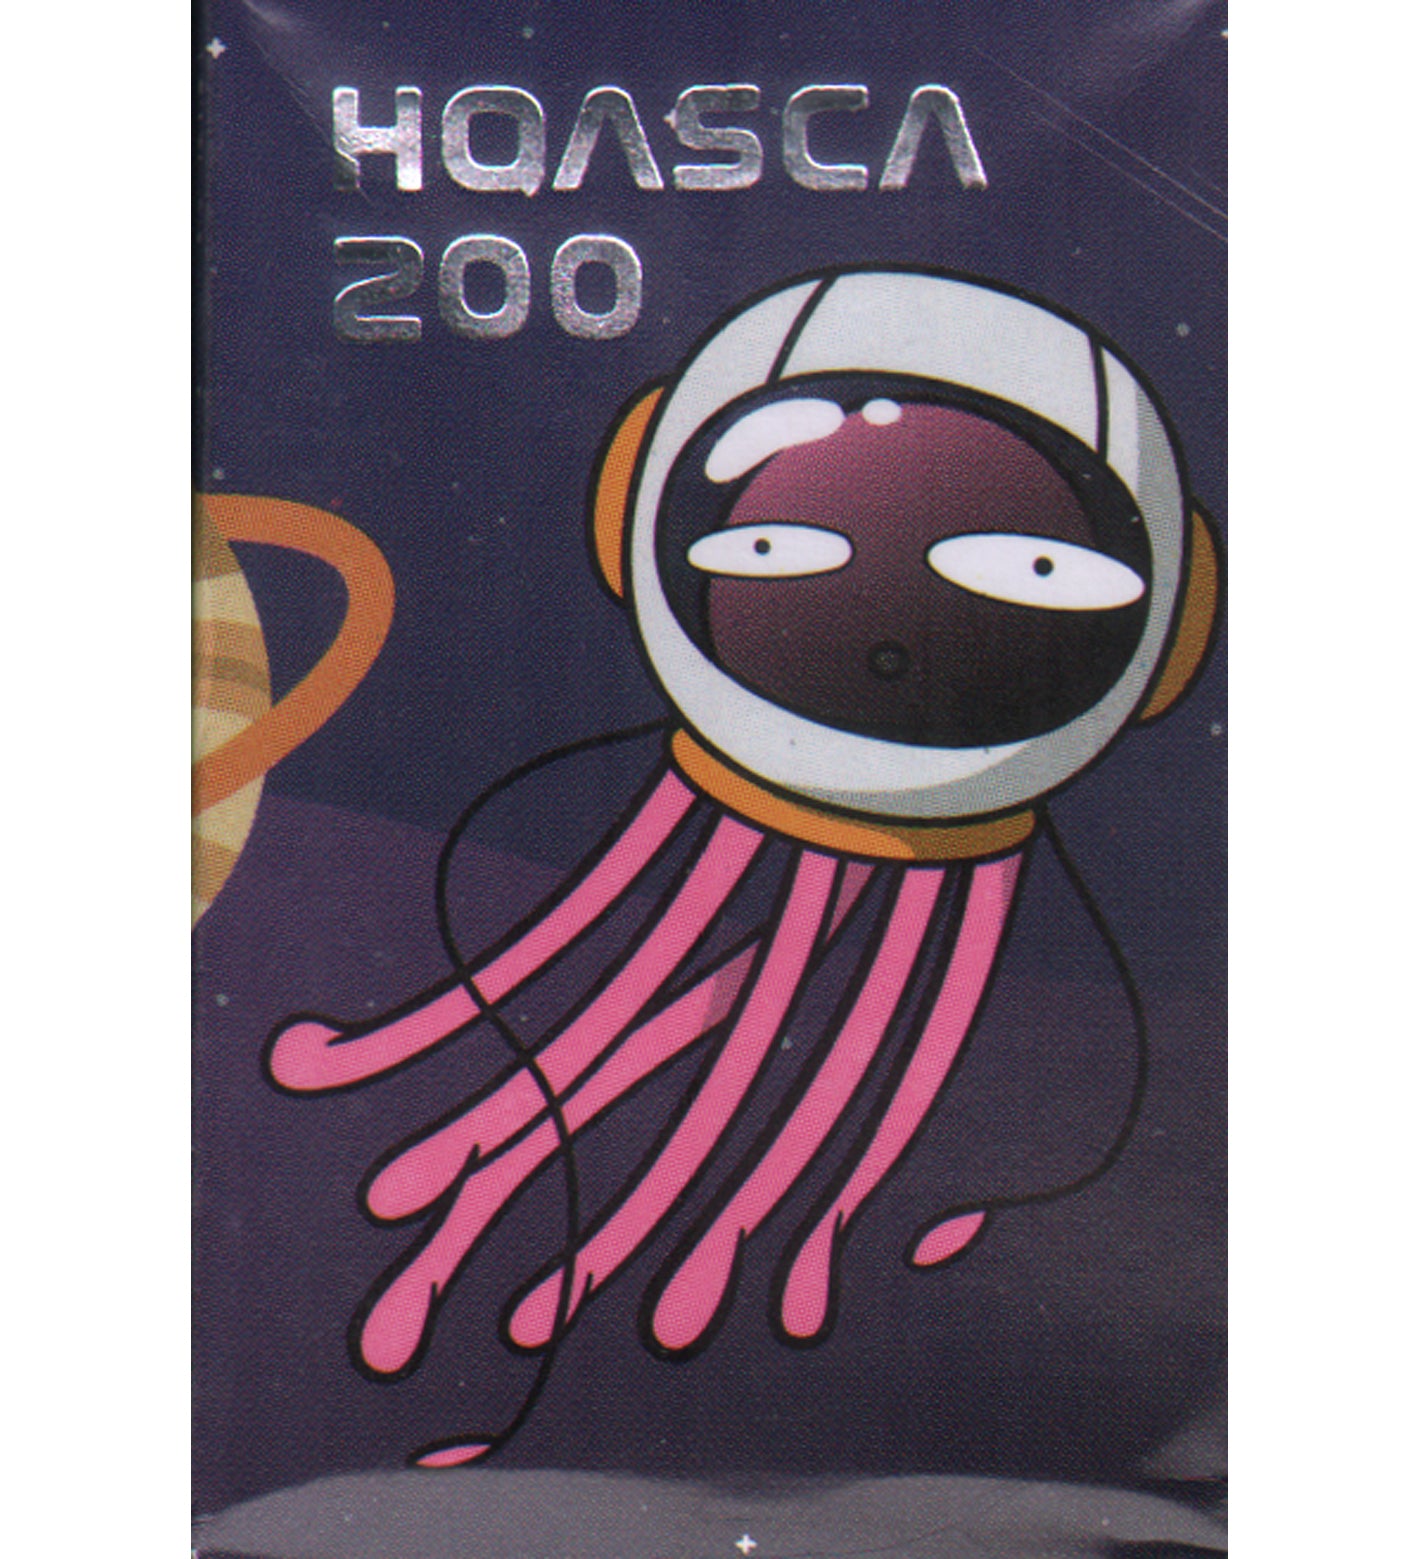 Hoasca Space Invaders 200 35mm Film 36 Exposures (£16.99 incl VAT)